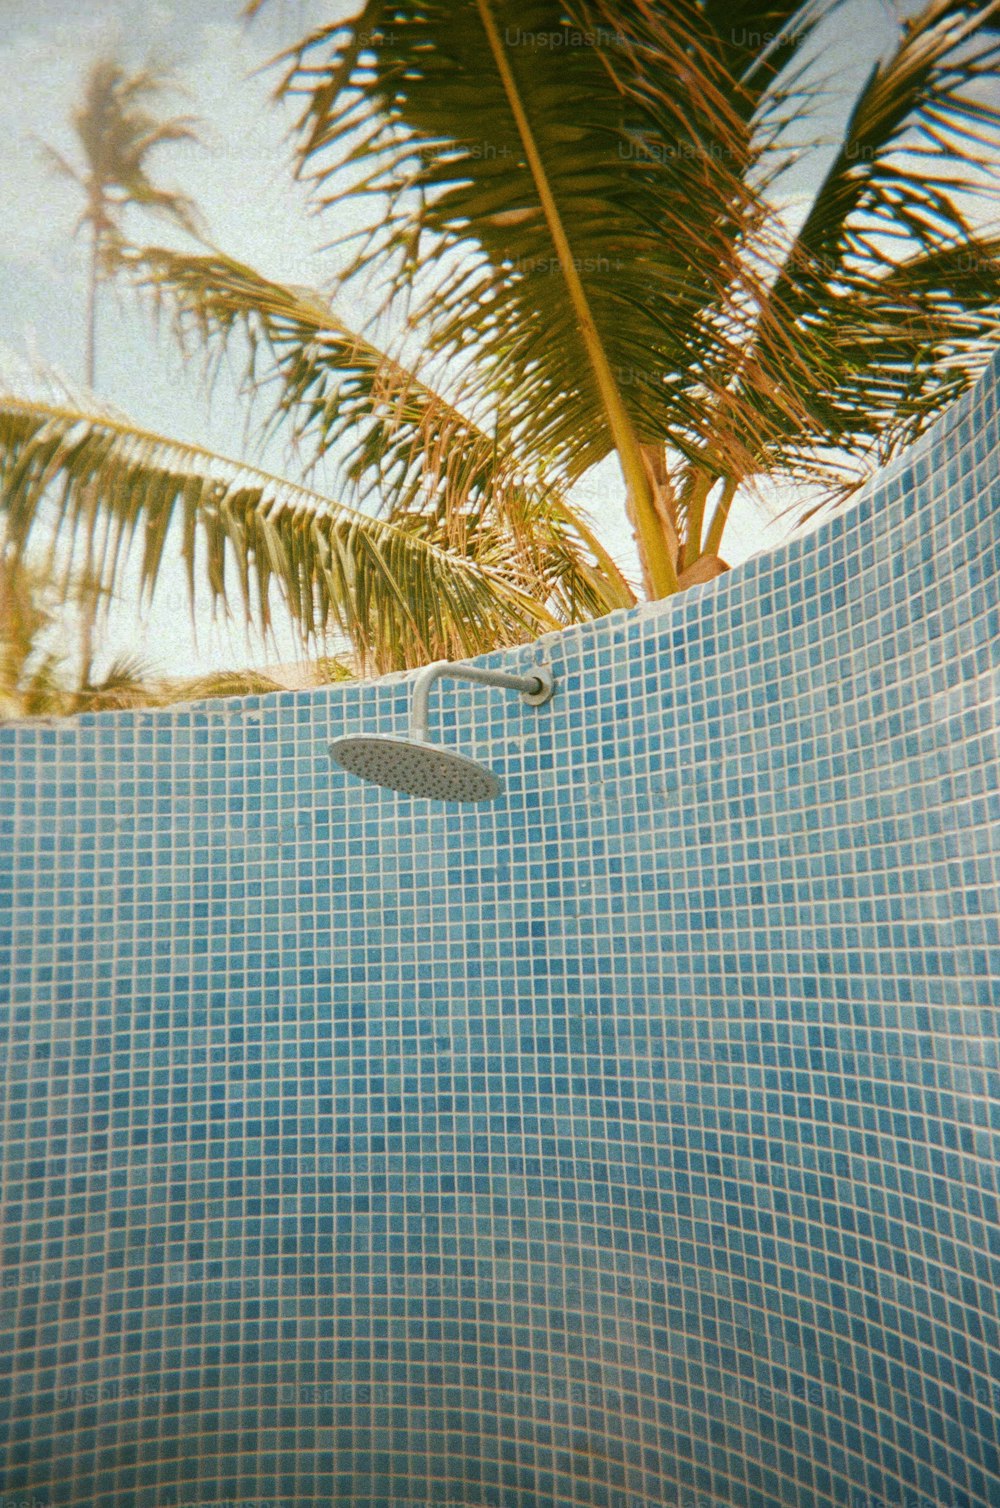 una piscina con una palmera al fondo